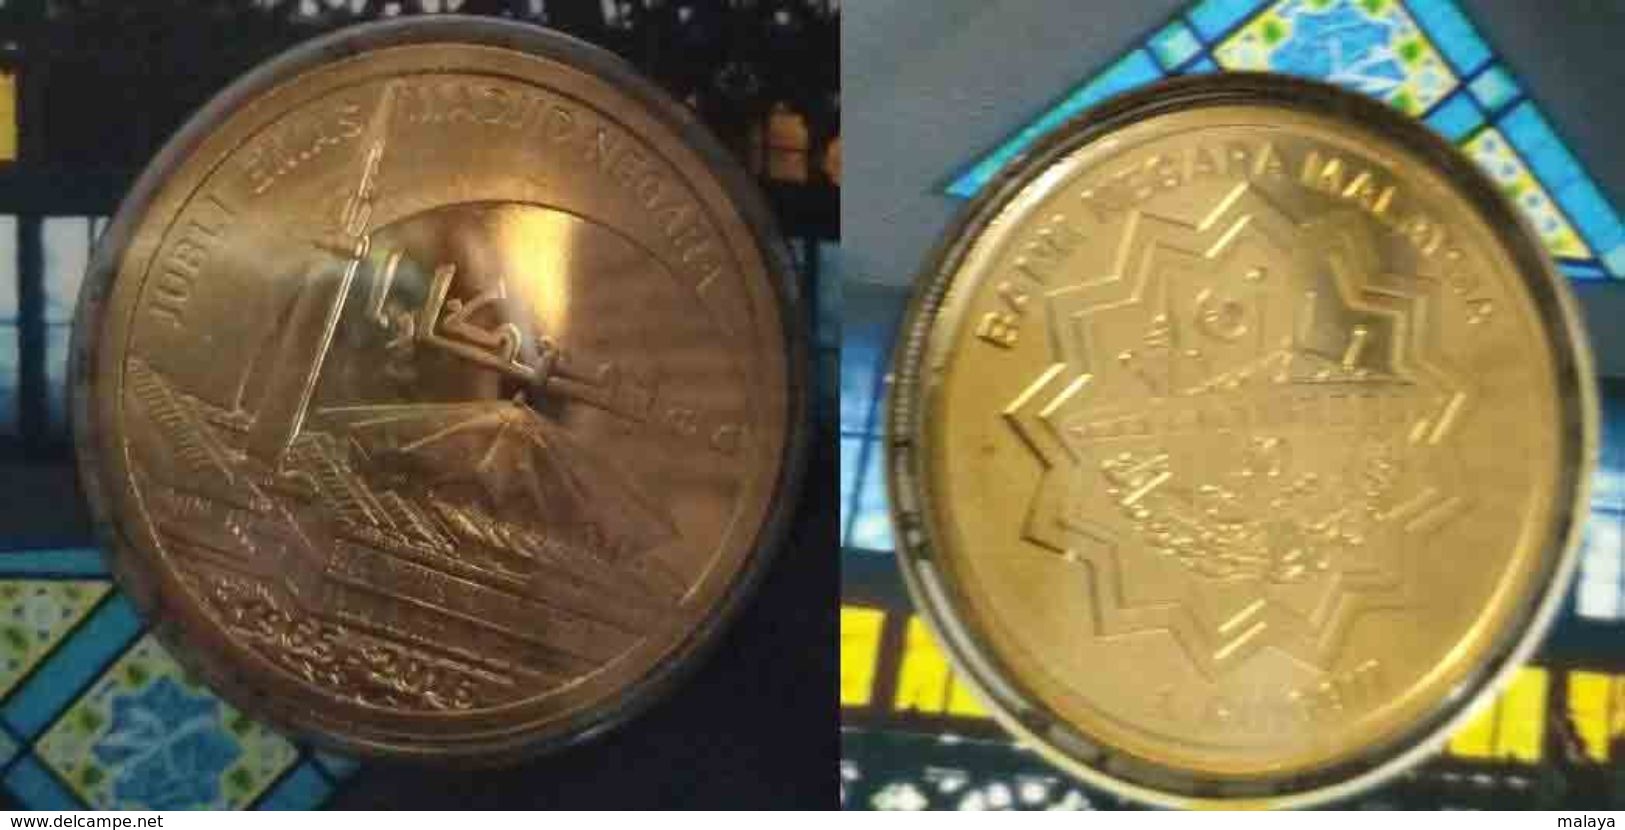 Malaysia 2015 Nordic Gold BU 1 Ringgit Coin National Mosque - Malaysia